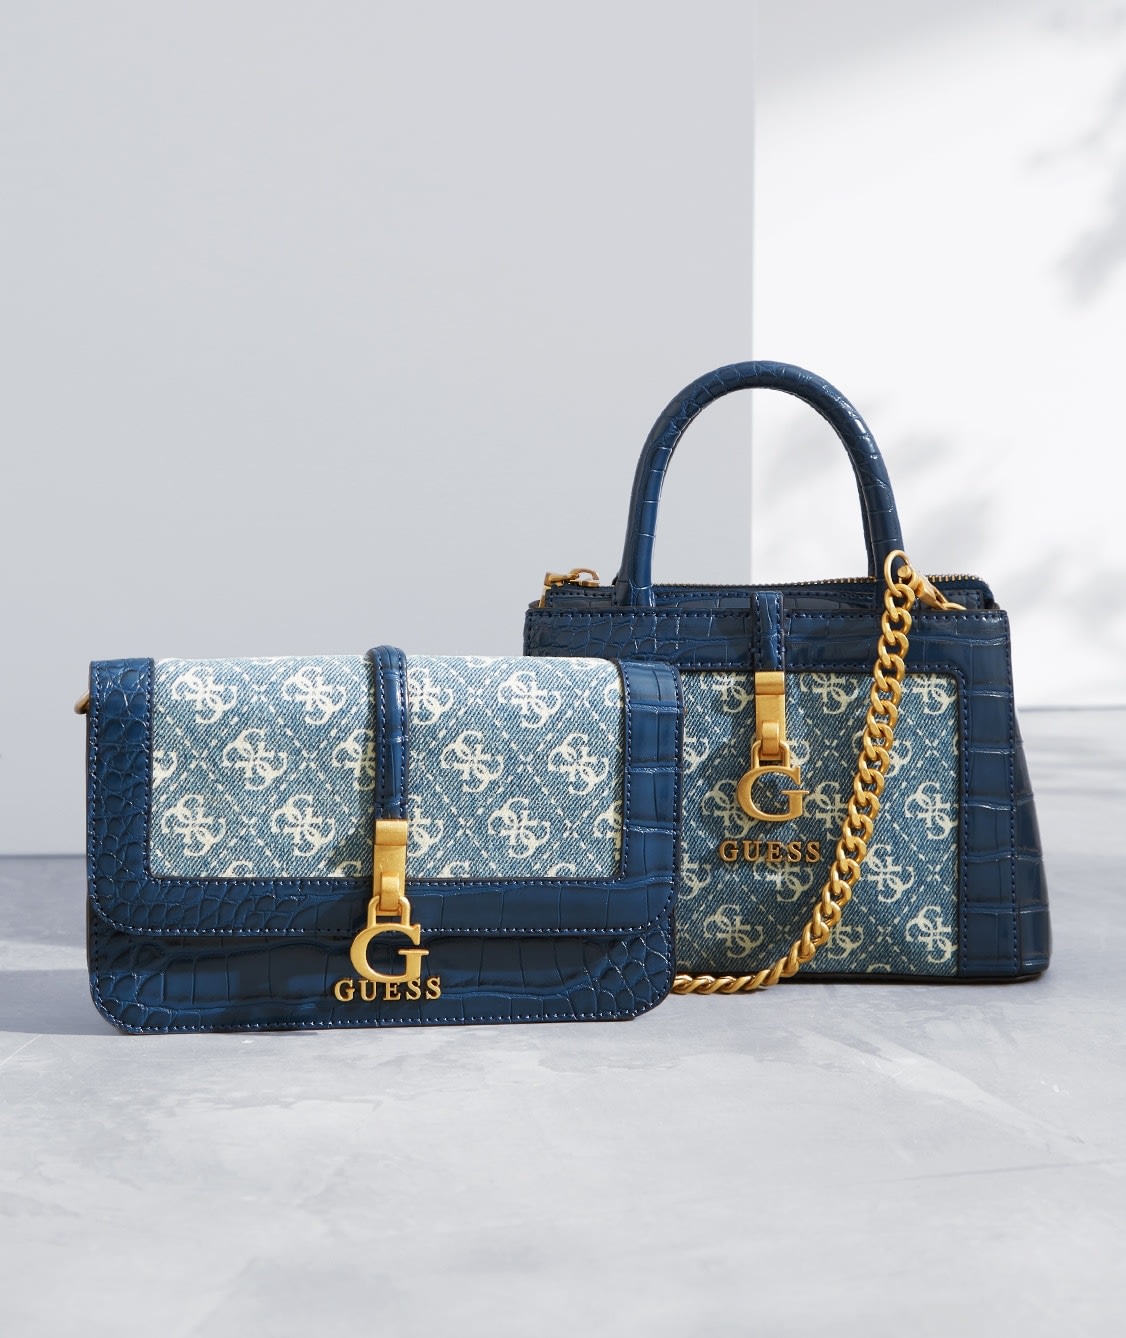 Discover handbags for the season ahead.